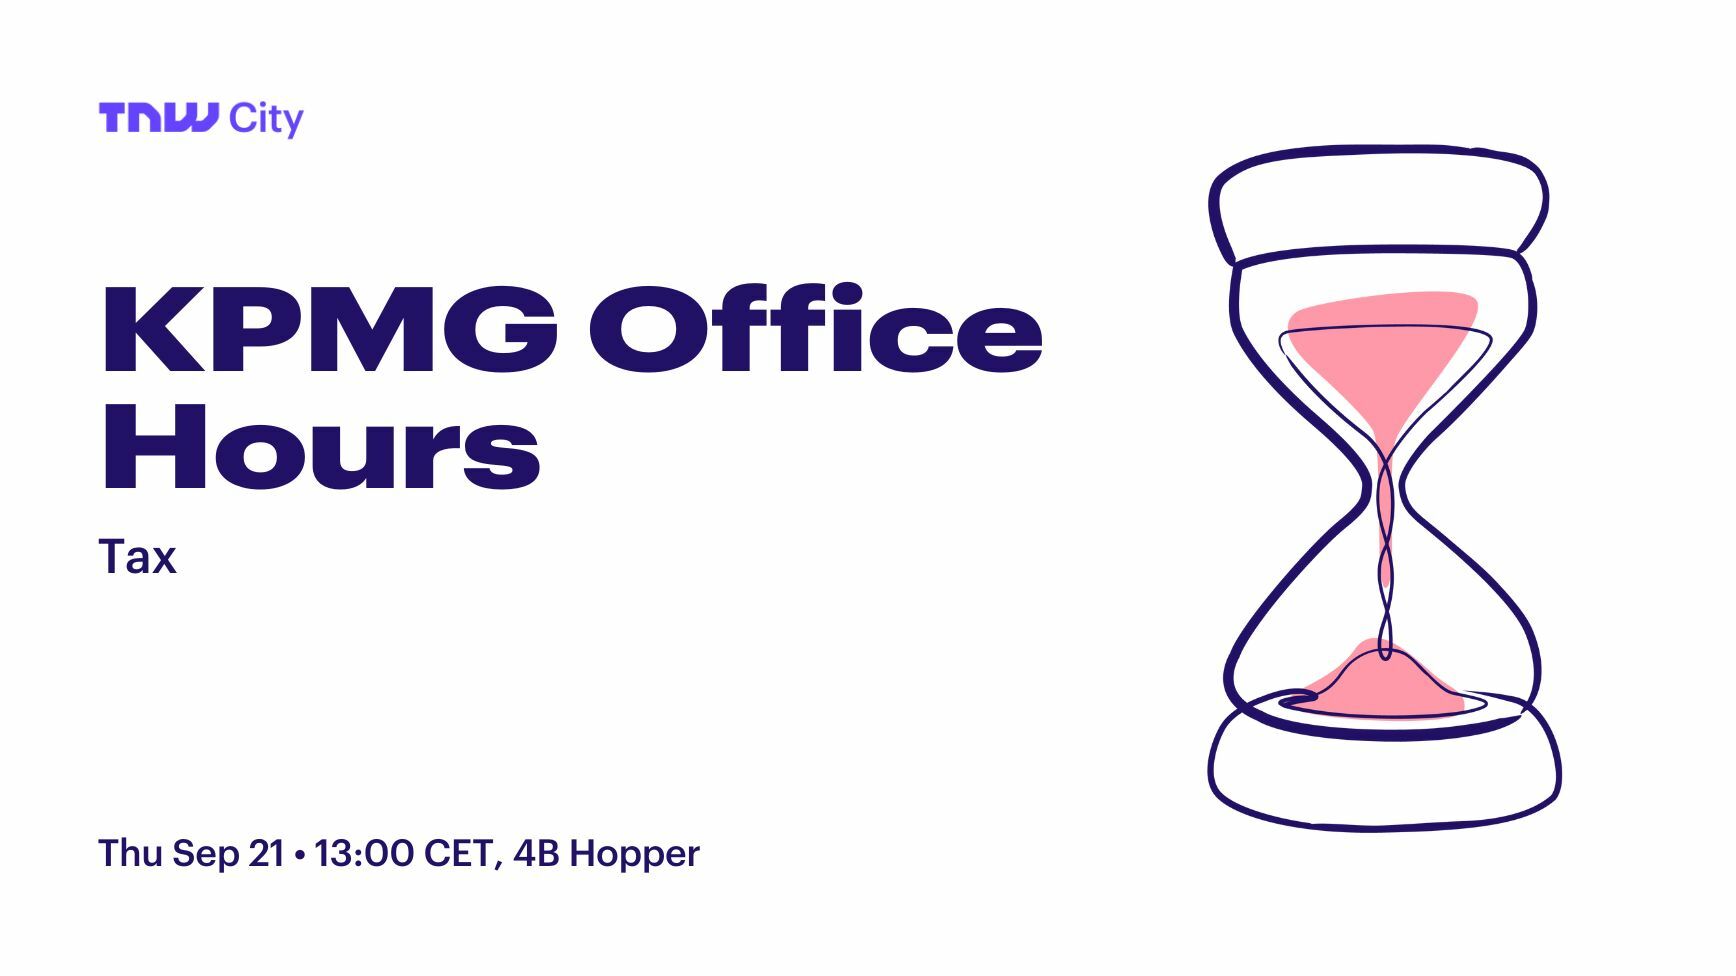 KPMG Office Hours: Tax